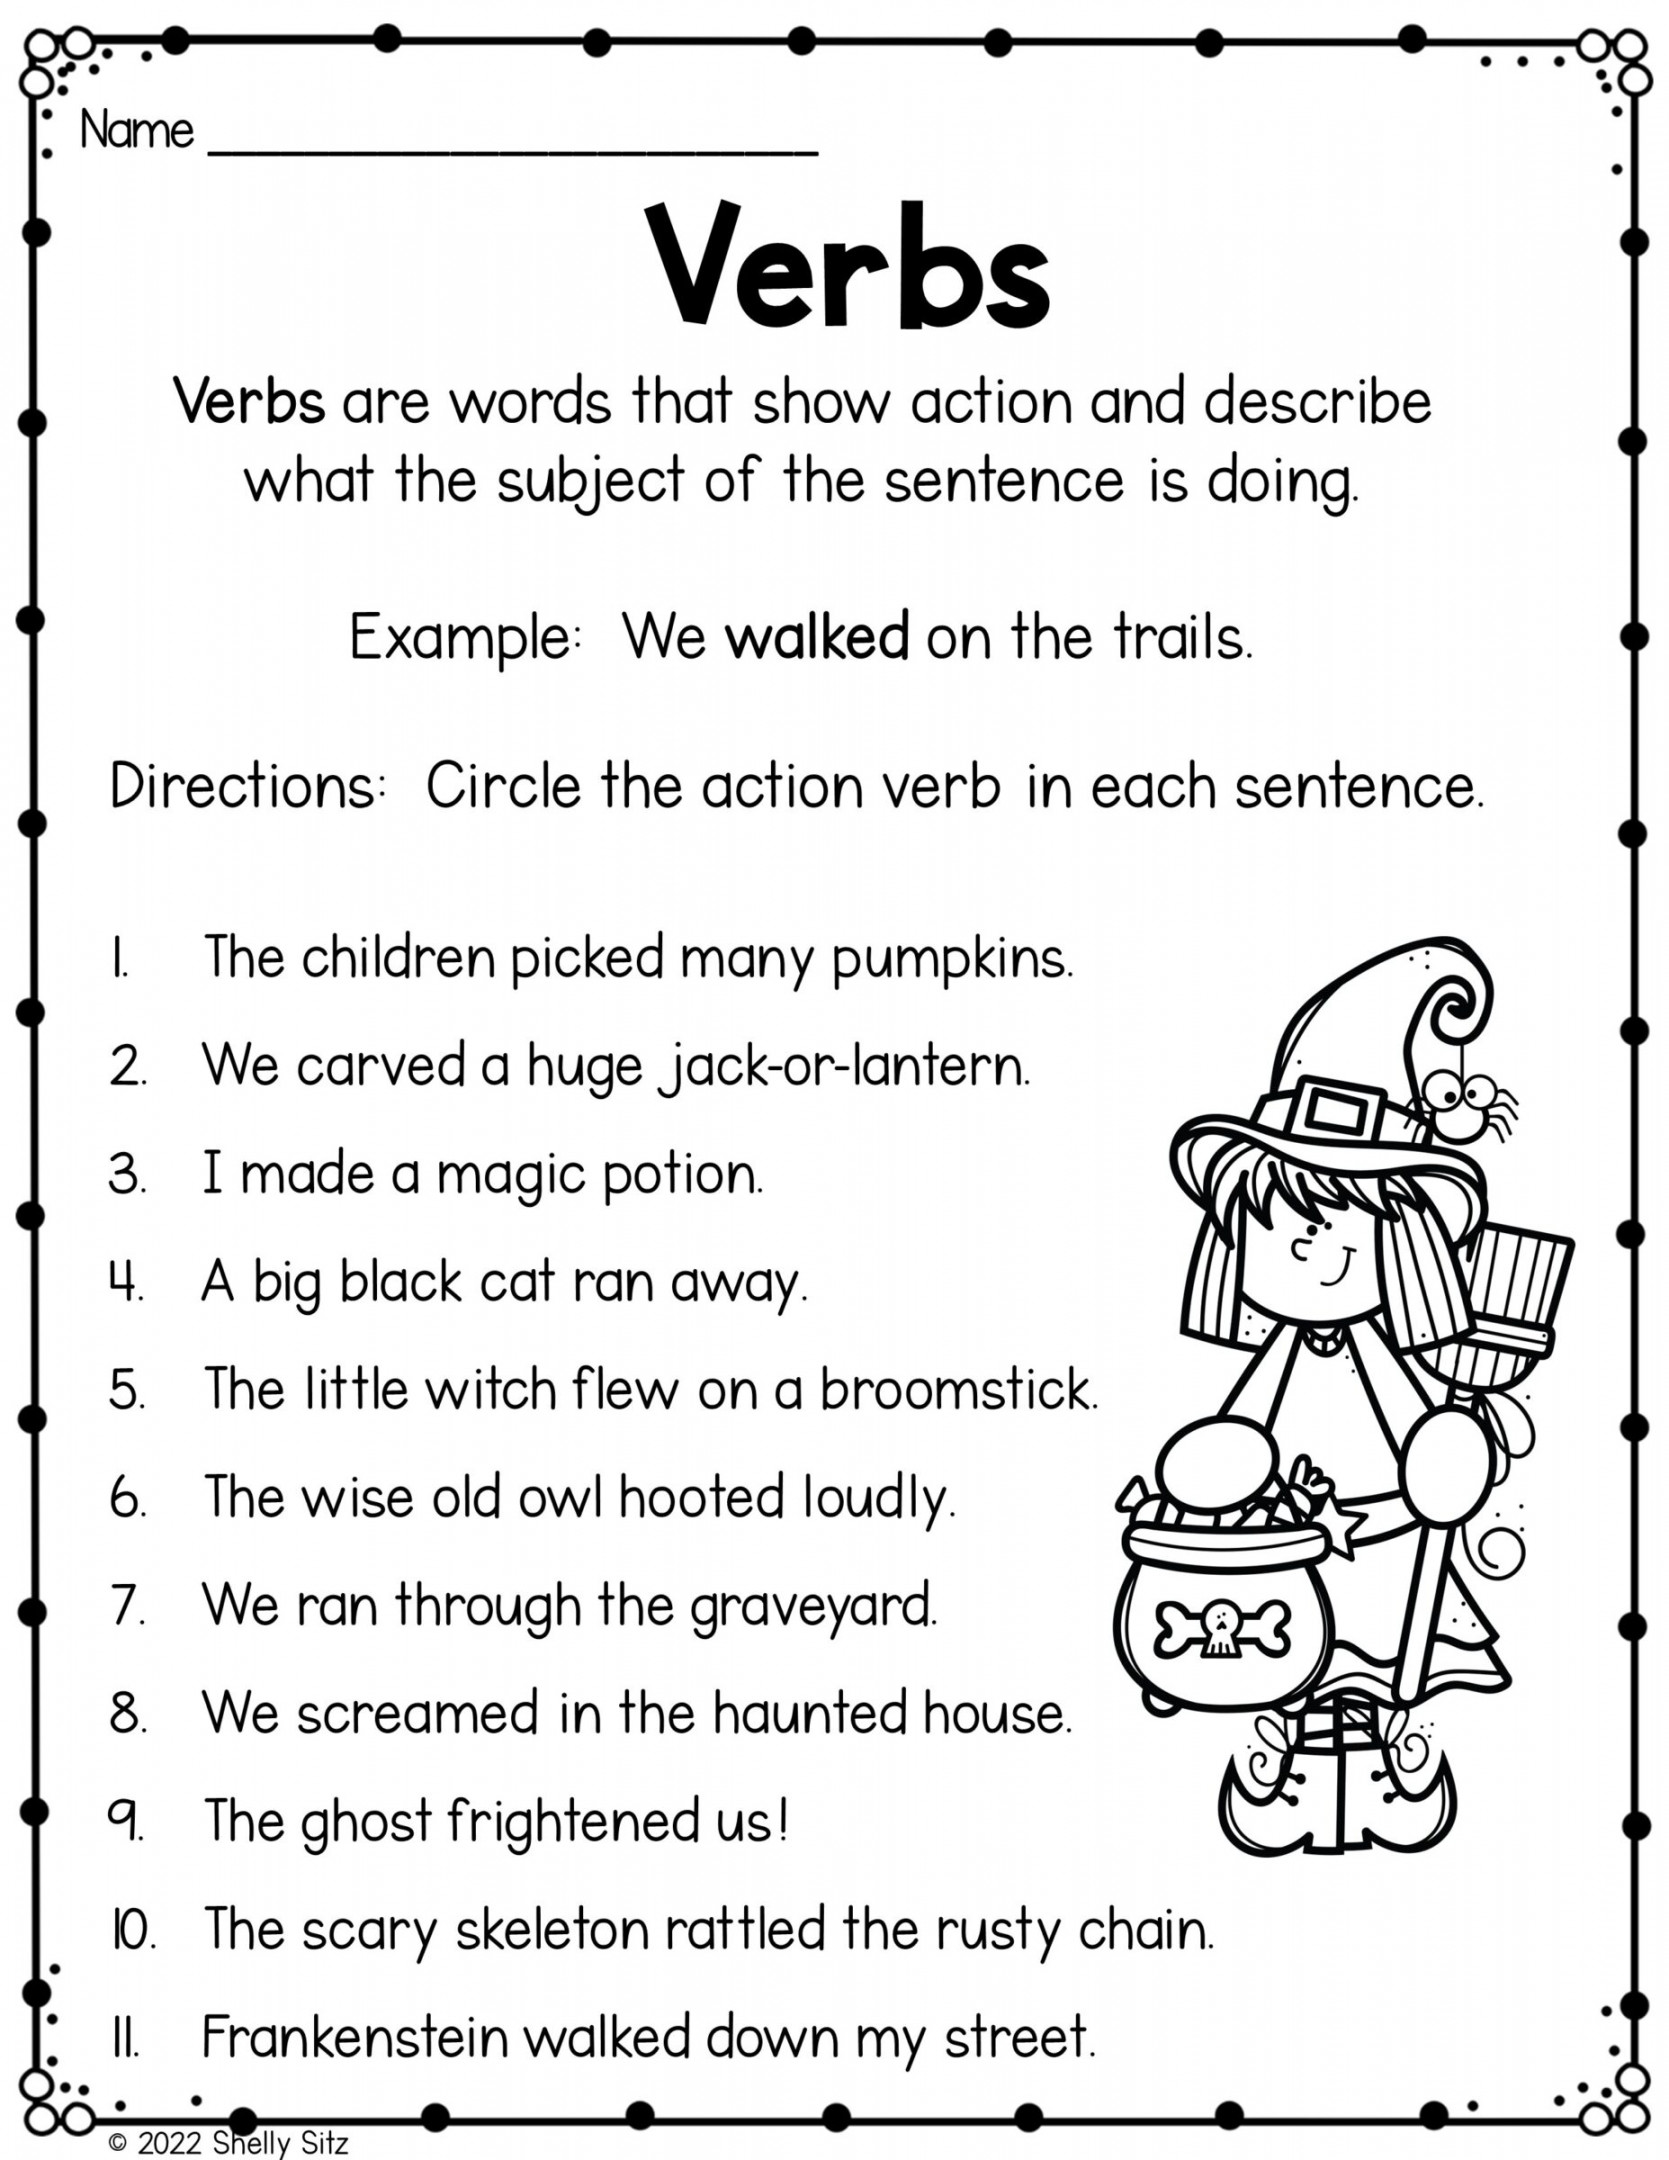 Verbs Worksheet Using Halloween Sentences - Smiling and Shining in